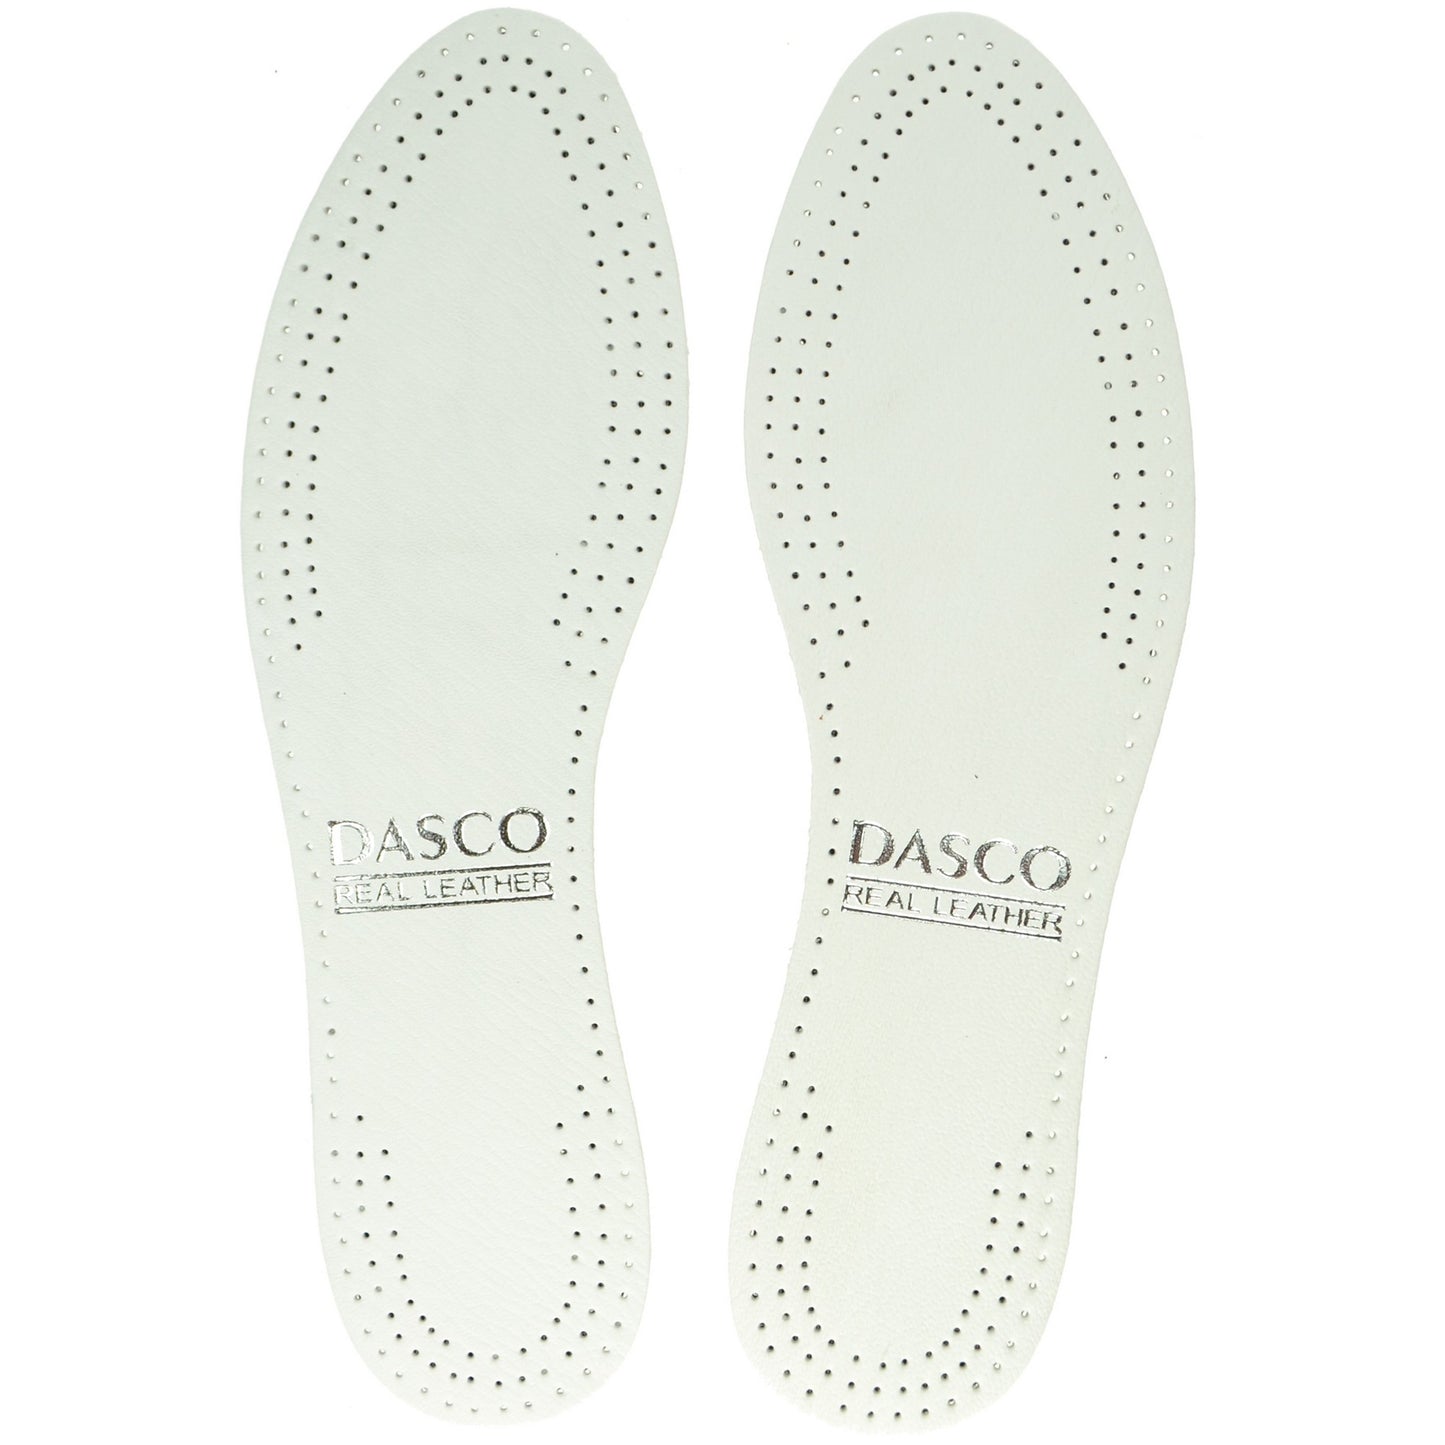 Dasco Ladies Leather Insole - White